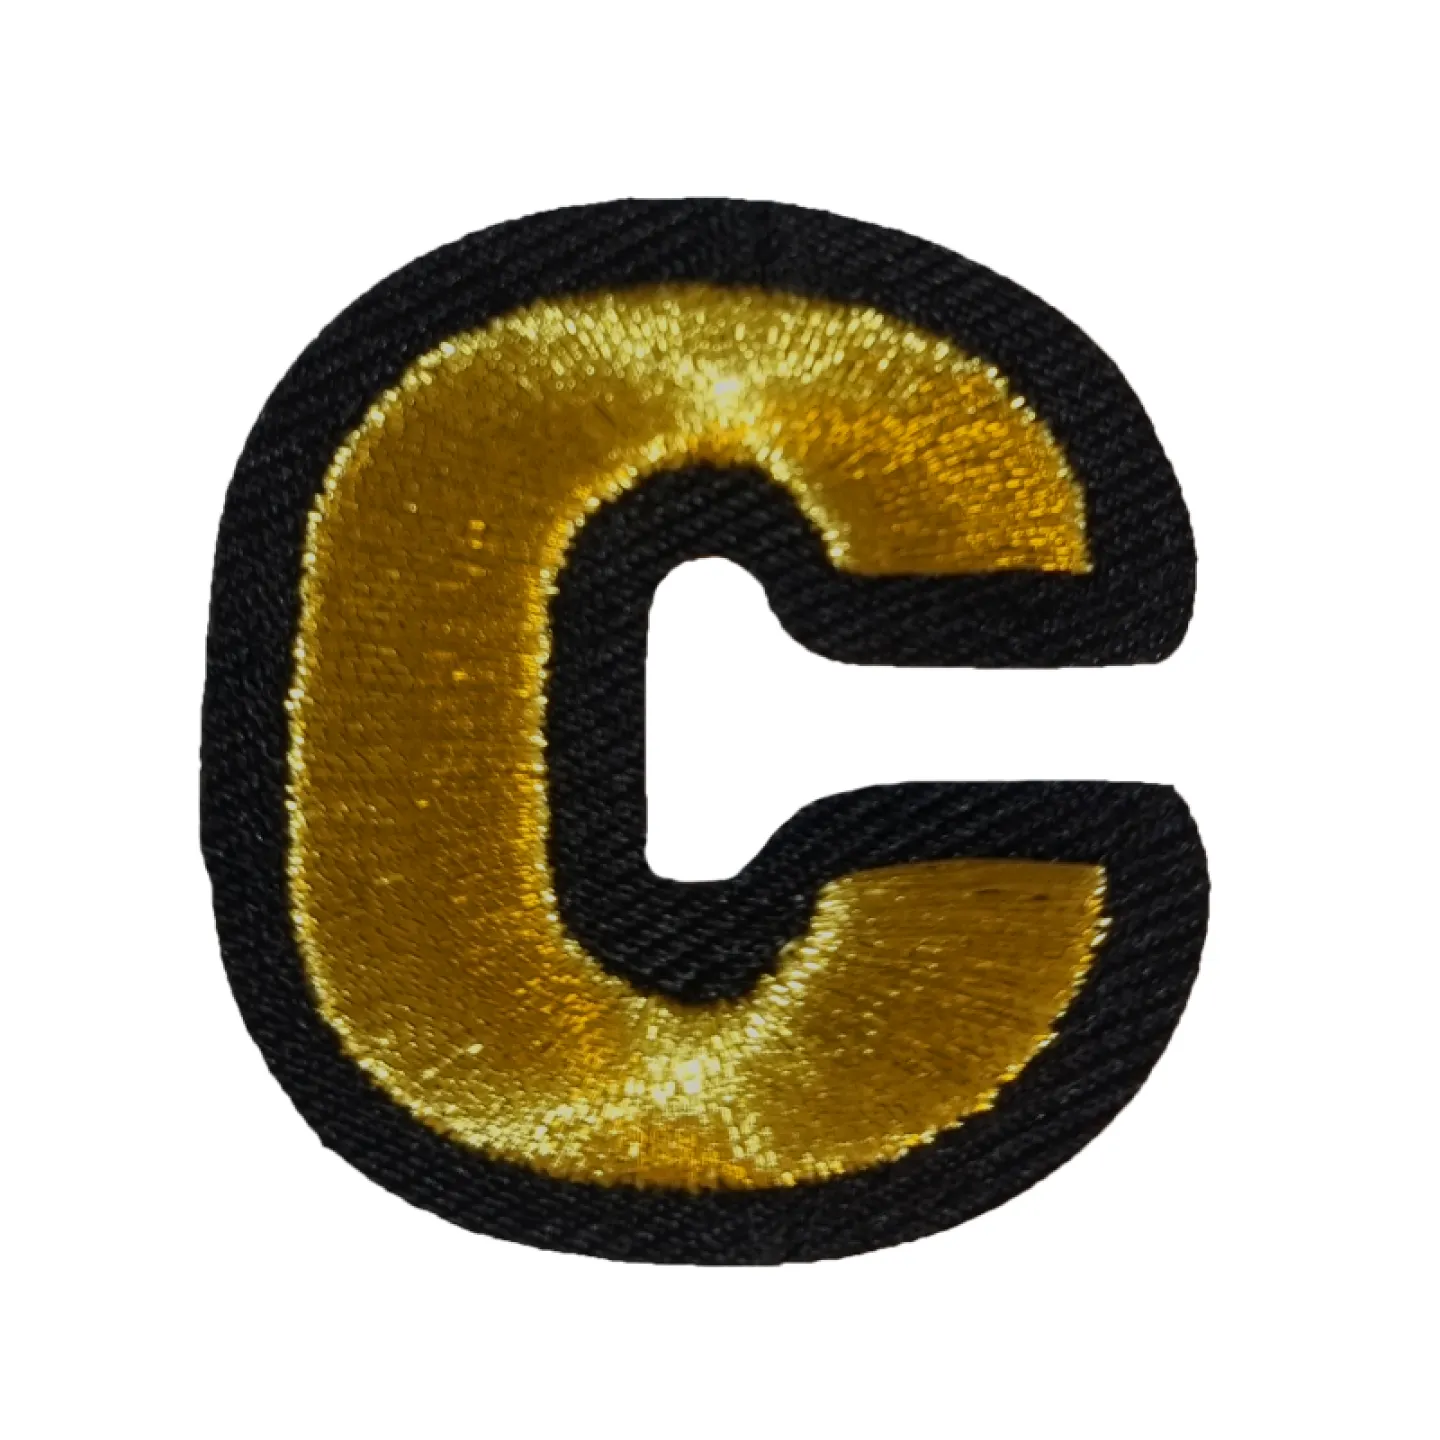 Lampegat embleem - Gouden letter C.